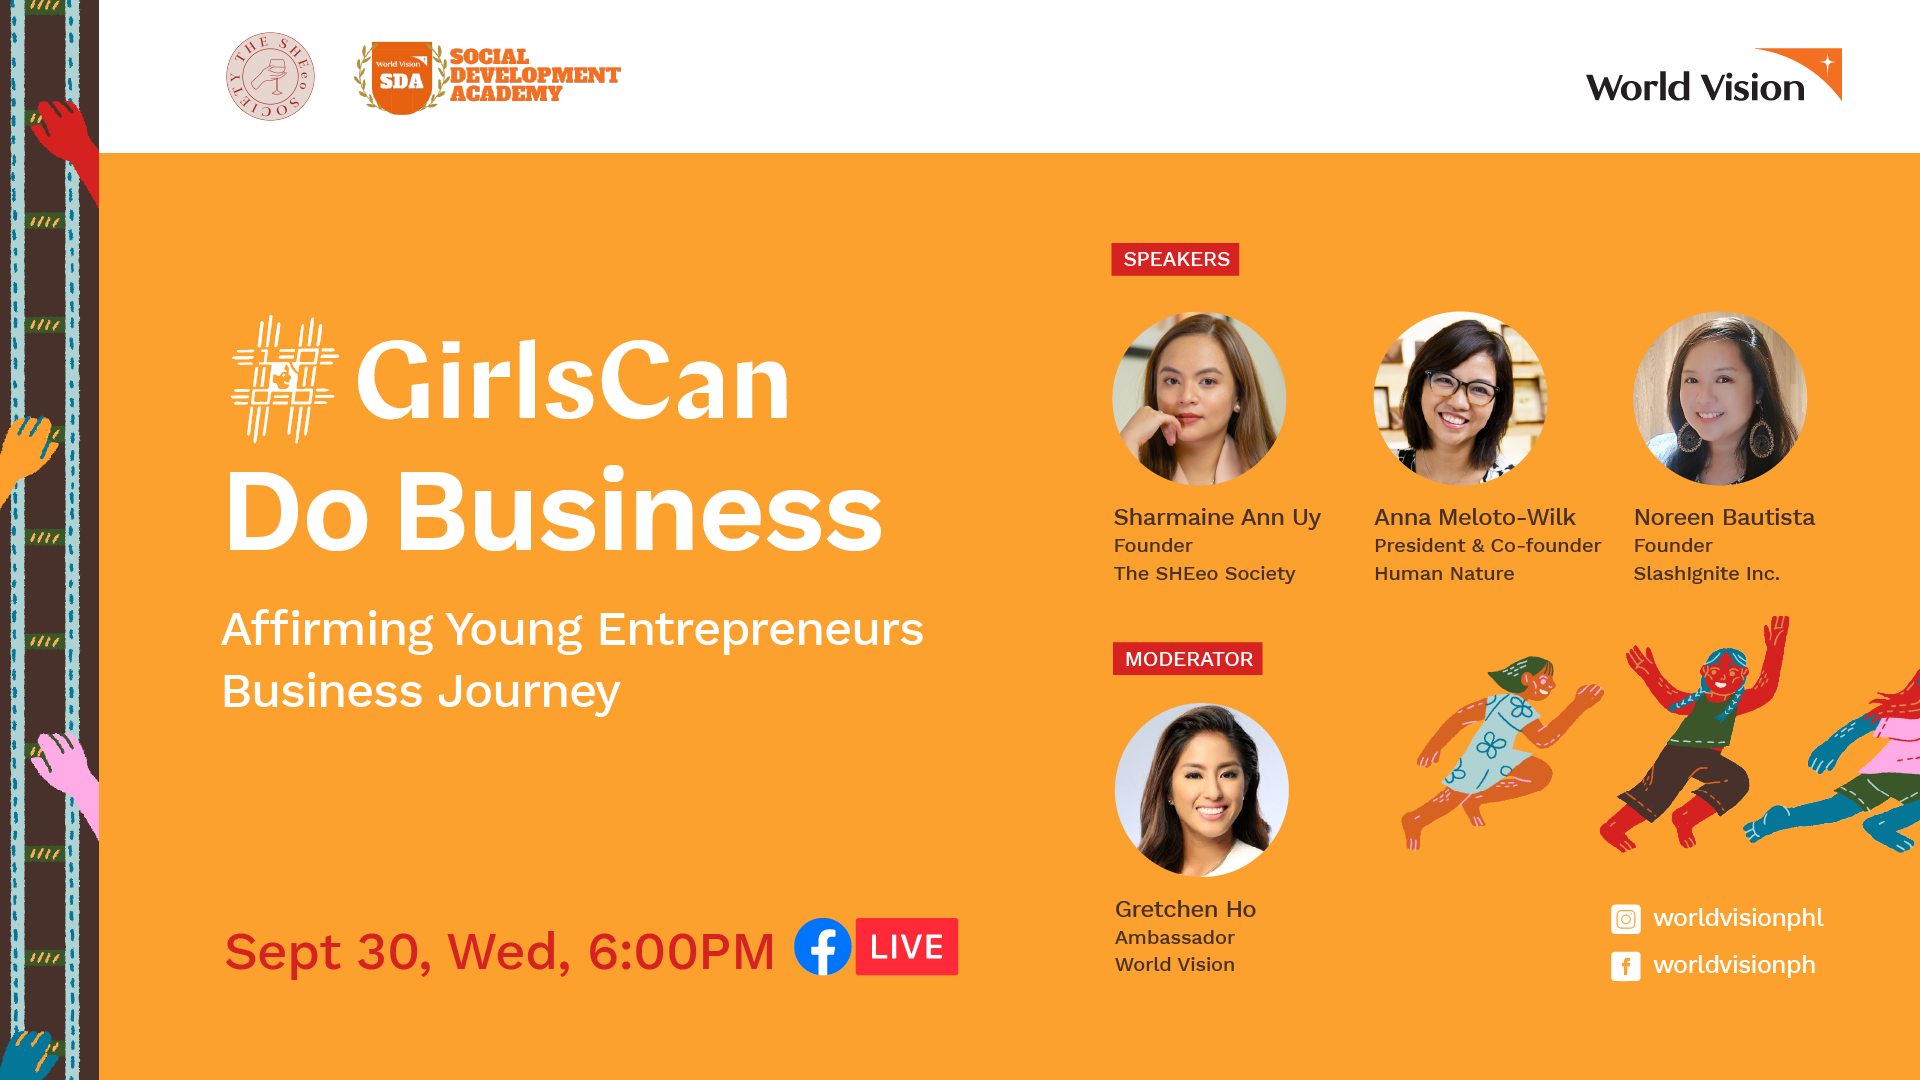 Gretchen Ho leads “#GirlsCan Do Business” webinar for World Vision’s 1000 Girls Campaign